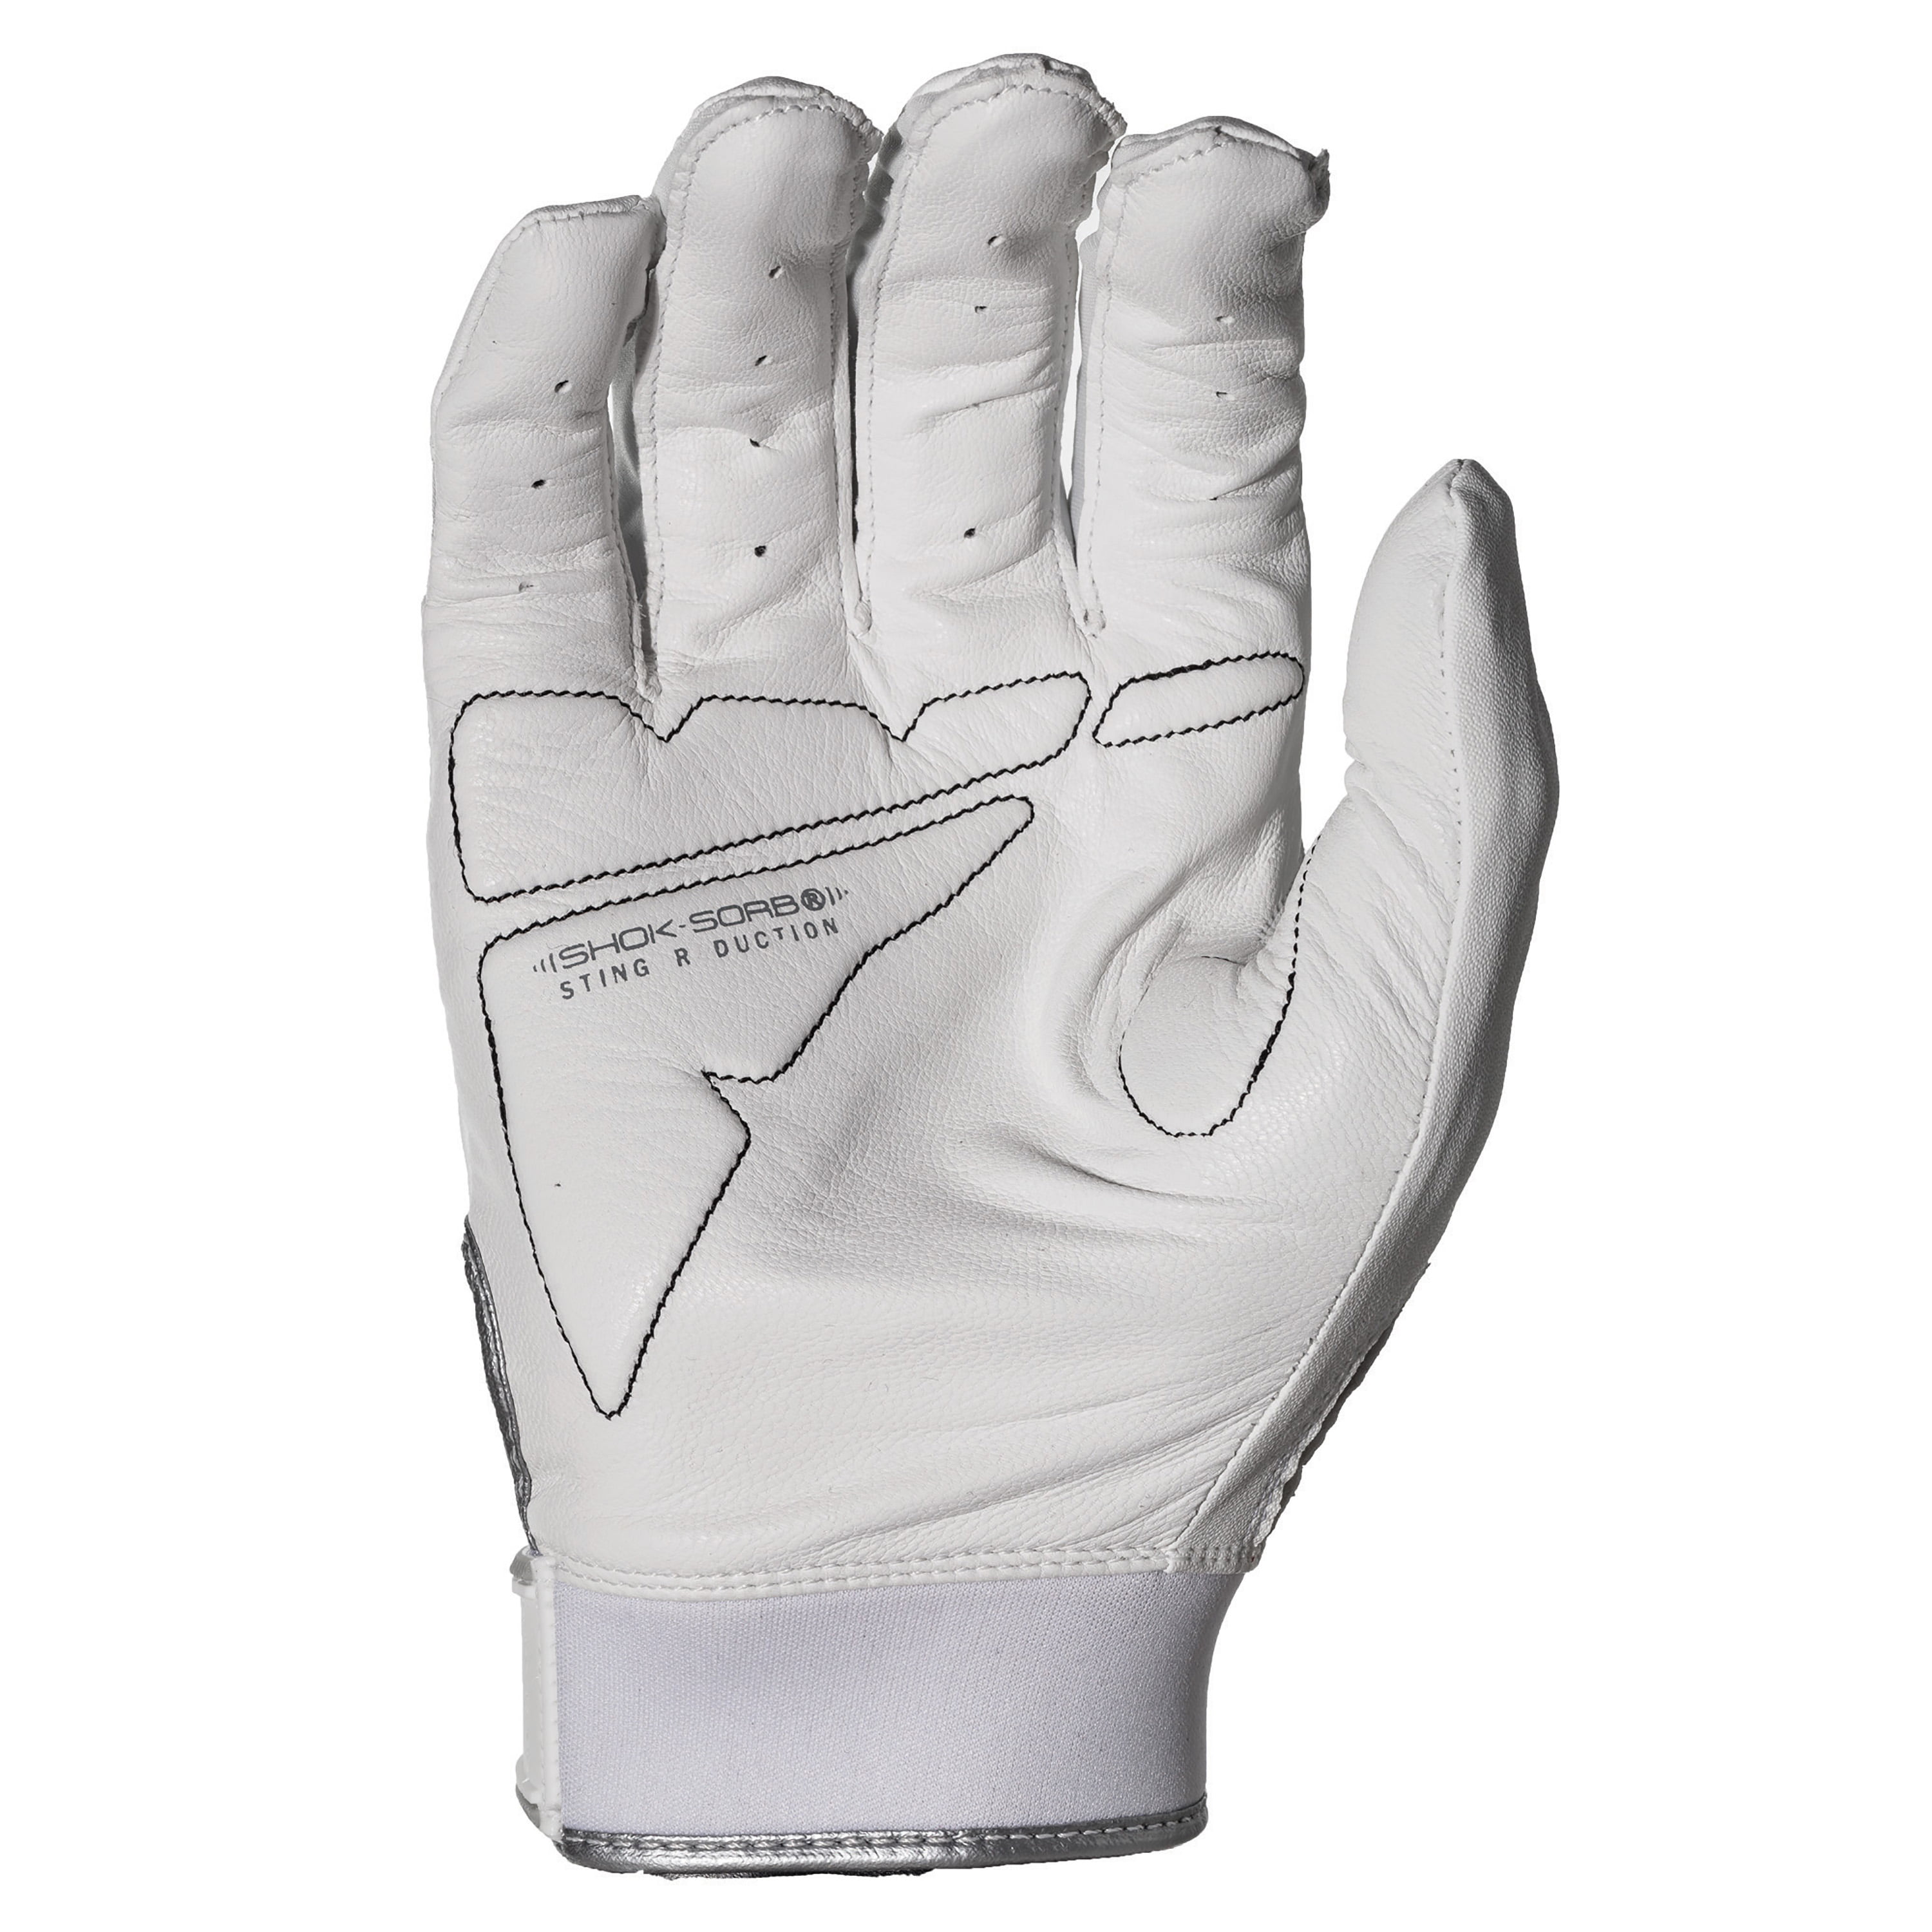 Franklin Sports Shok-Sorb X Batting Gloves - White/White - Adult Medium